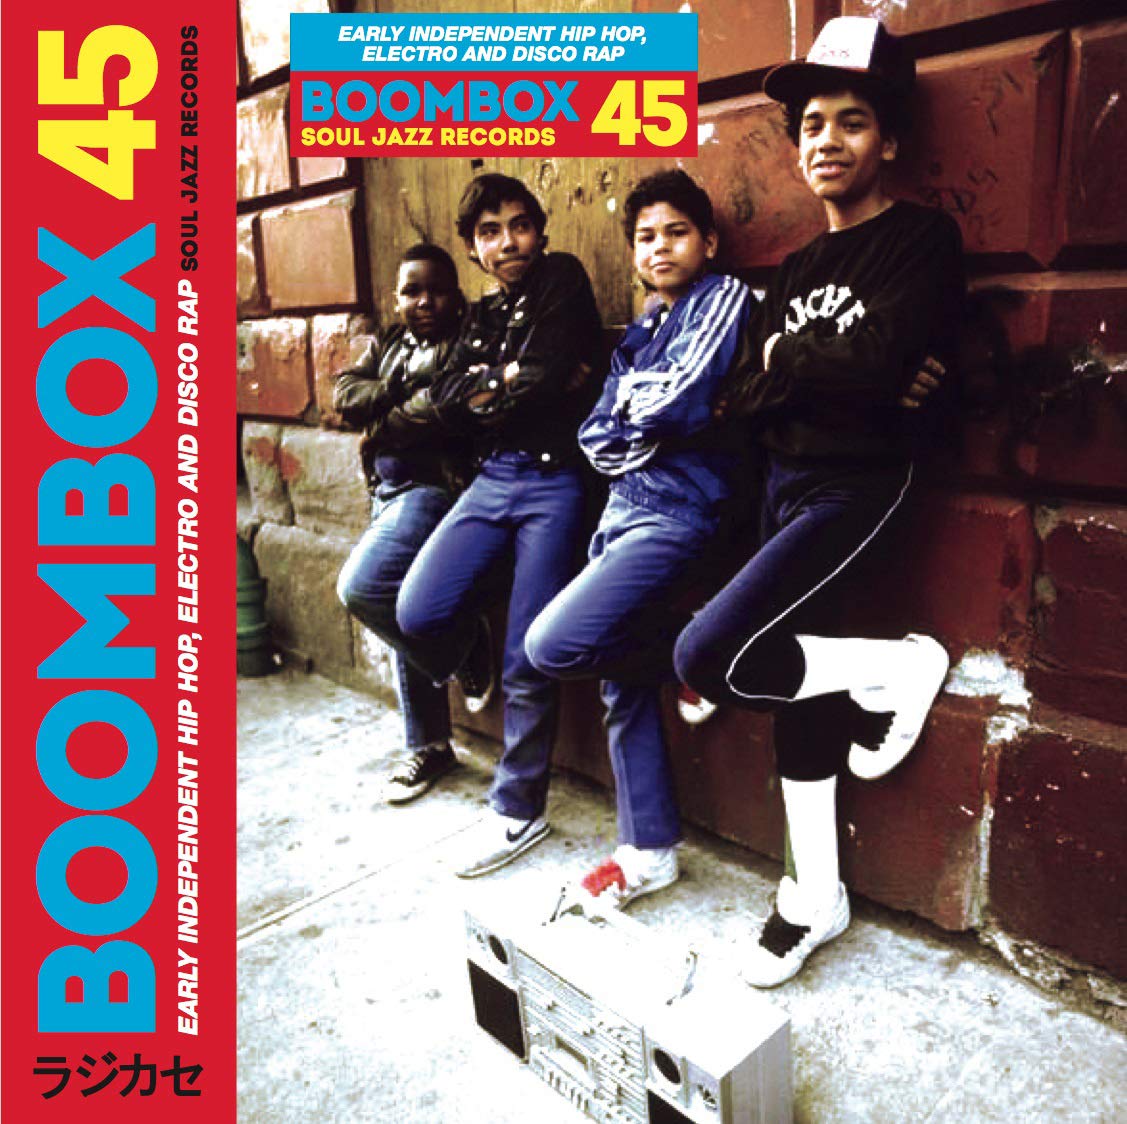 Boombox 45 - Soul Jazz Records (7")